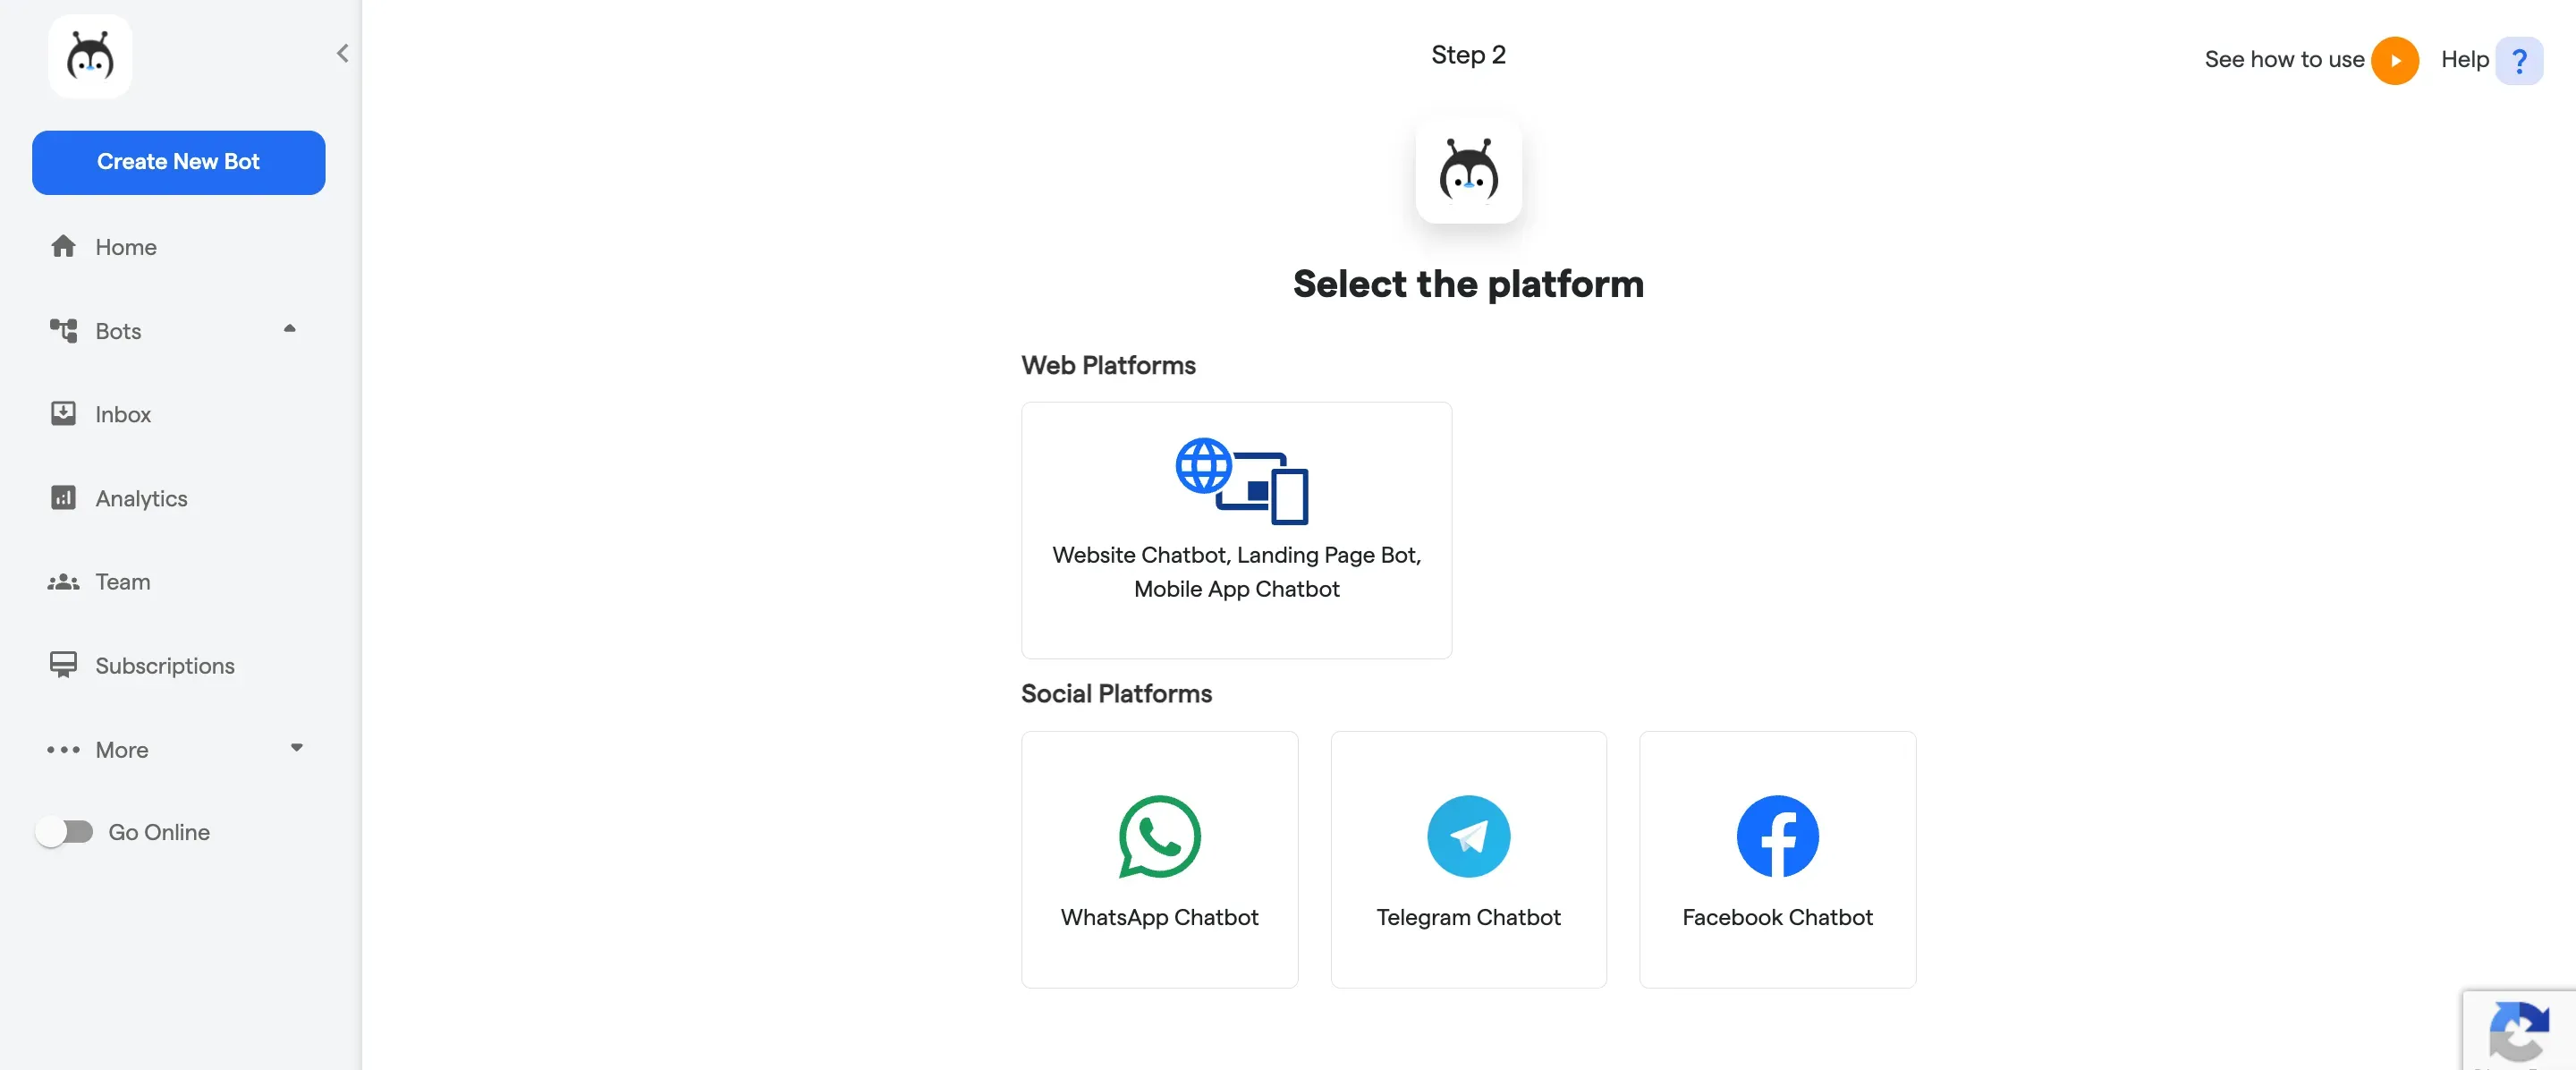 Select the platform